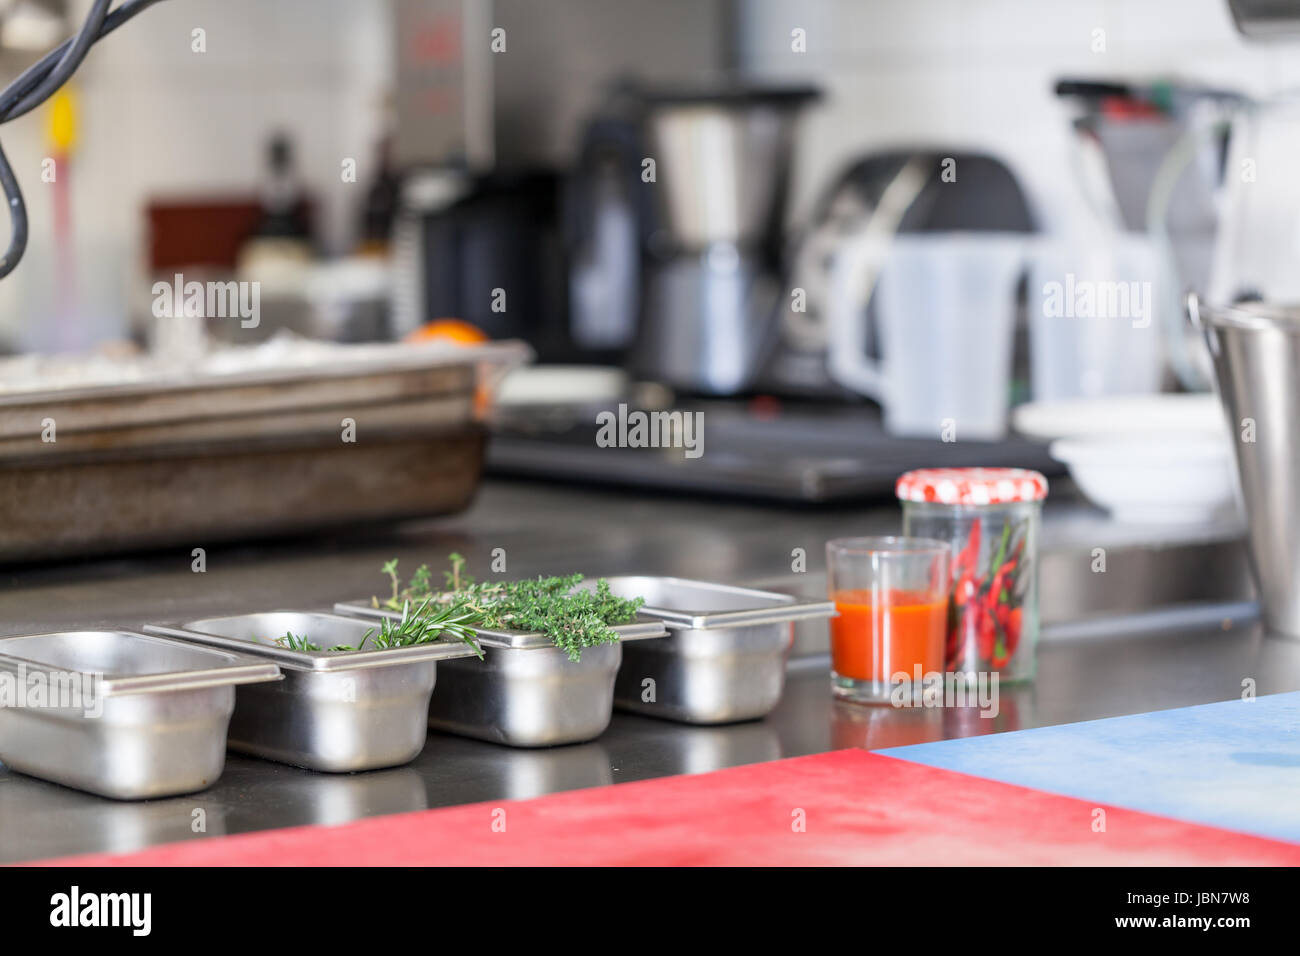 Restaurante küche innen kochen kochfeld einrichtung industriell großküche kantine catering Foto de stock